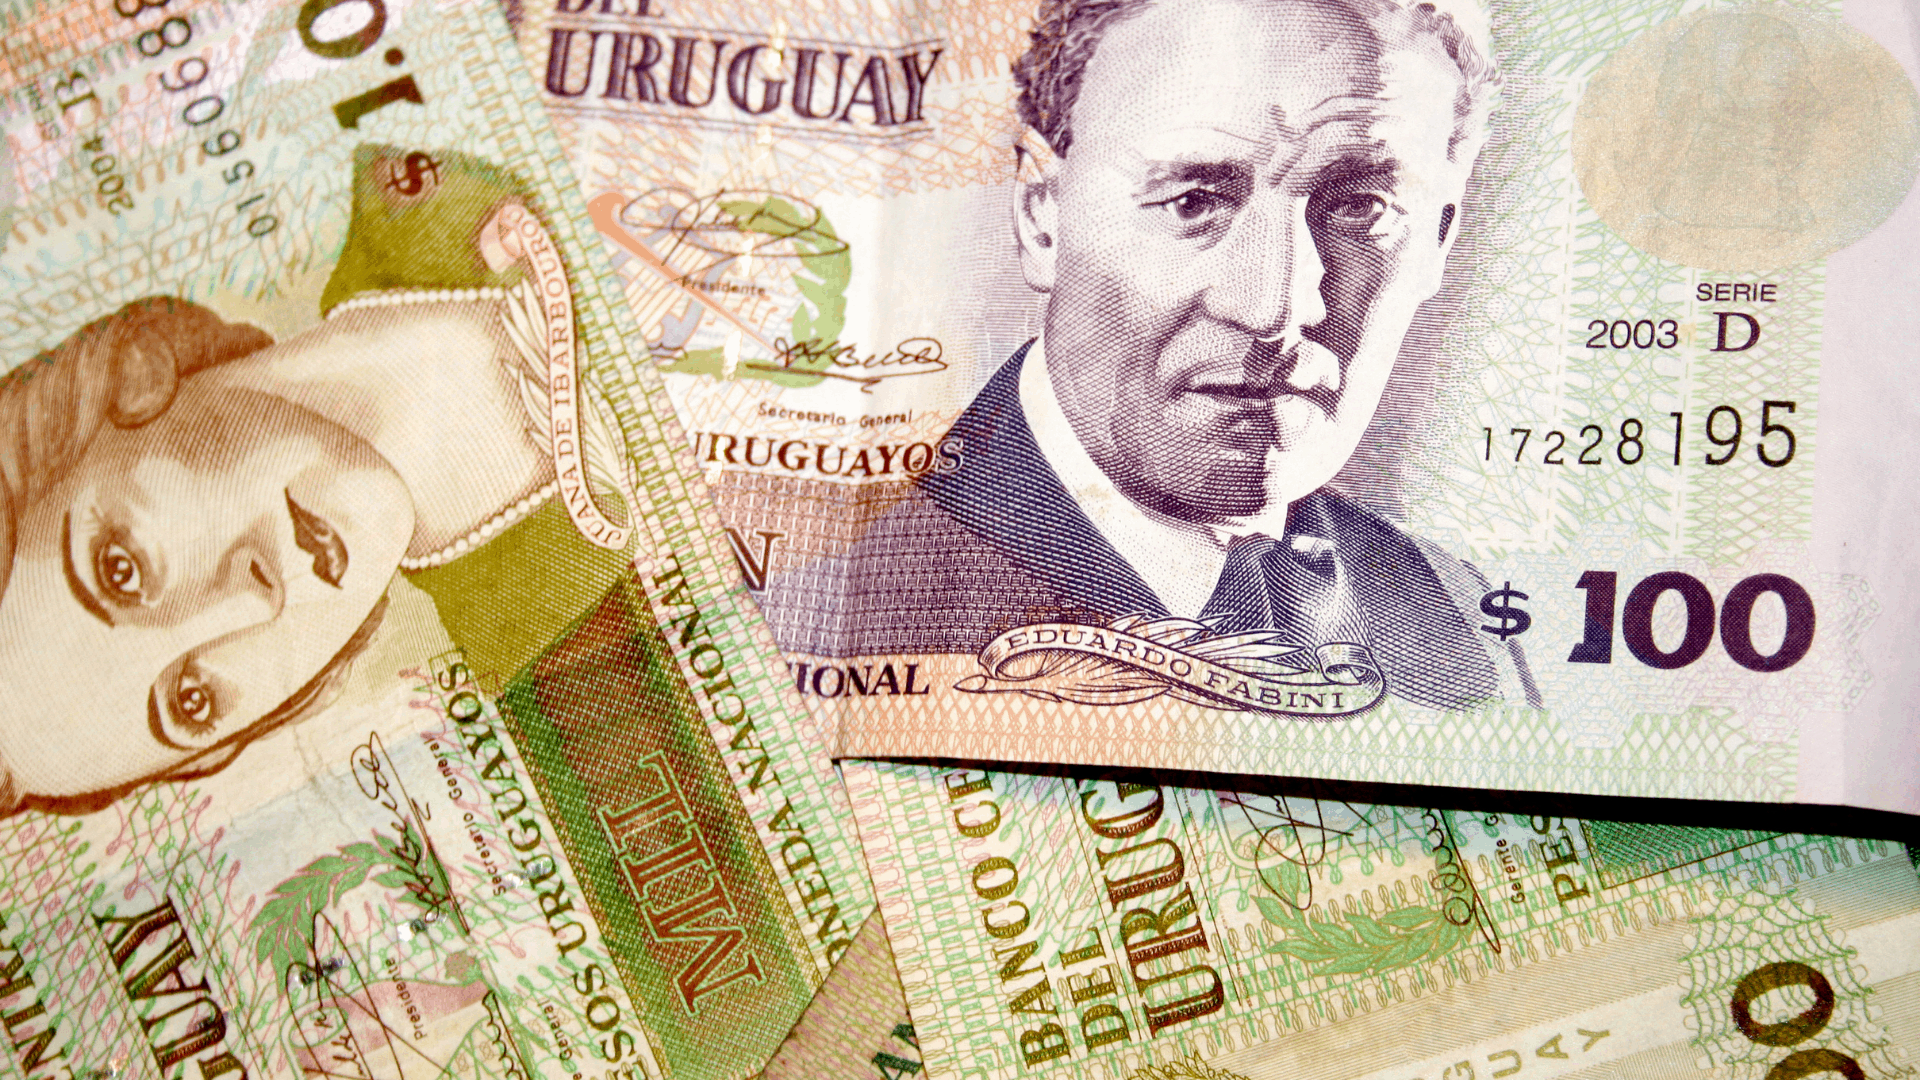 Uruguayan Peso. (Photo internet reproduction)